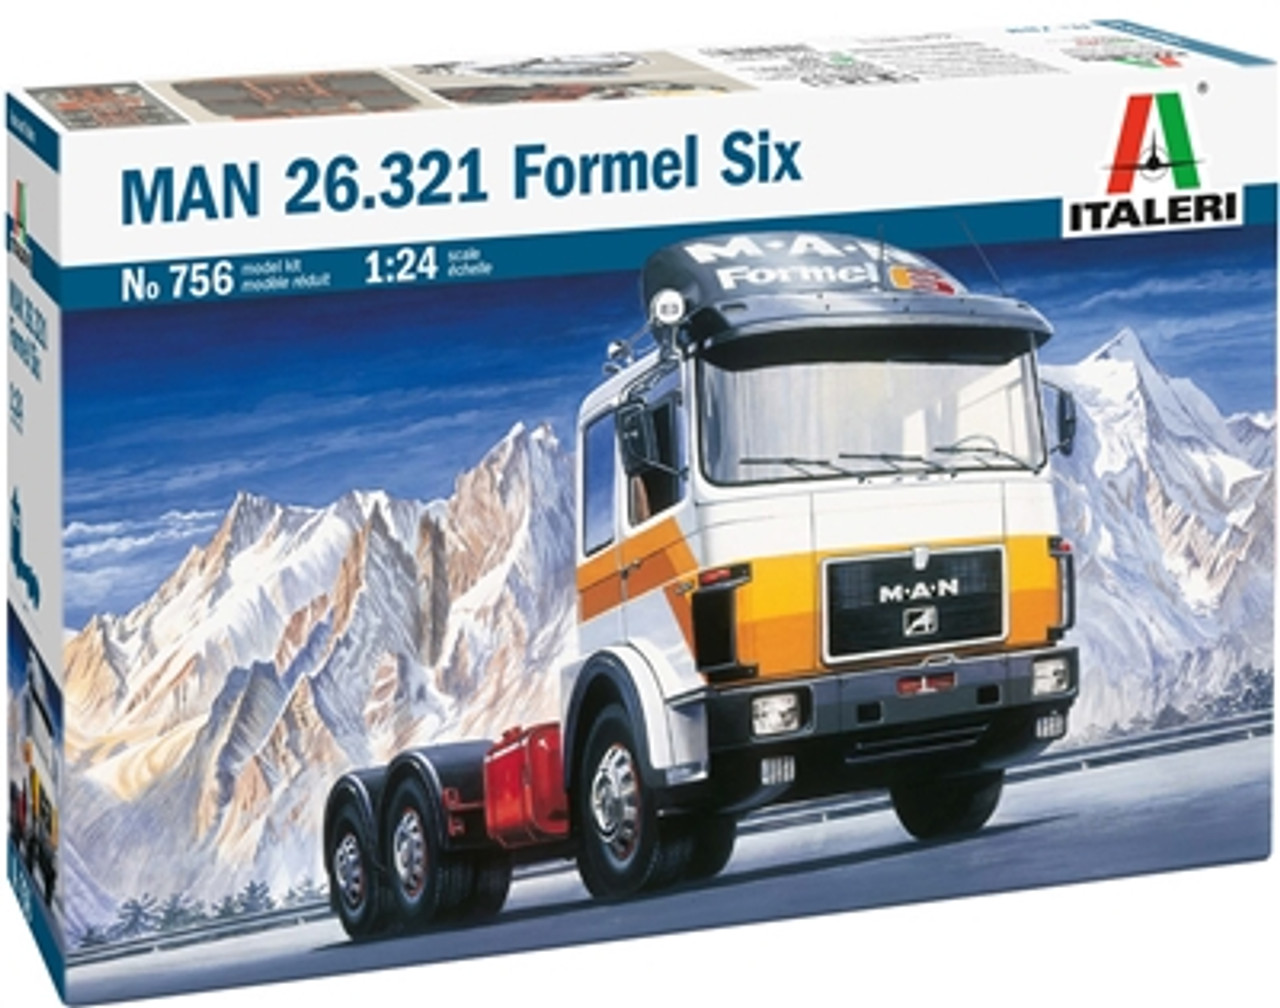 Italeri 0756 1/24 MAN 26.321 Formel Six Plastic Model Kit